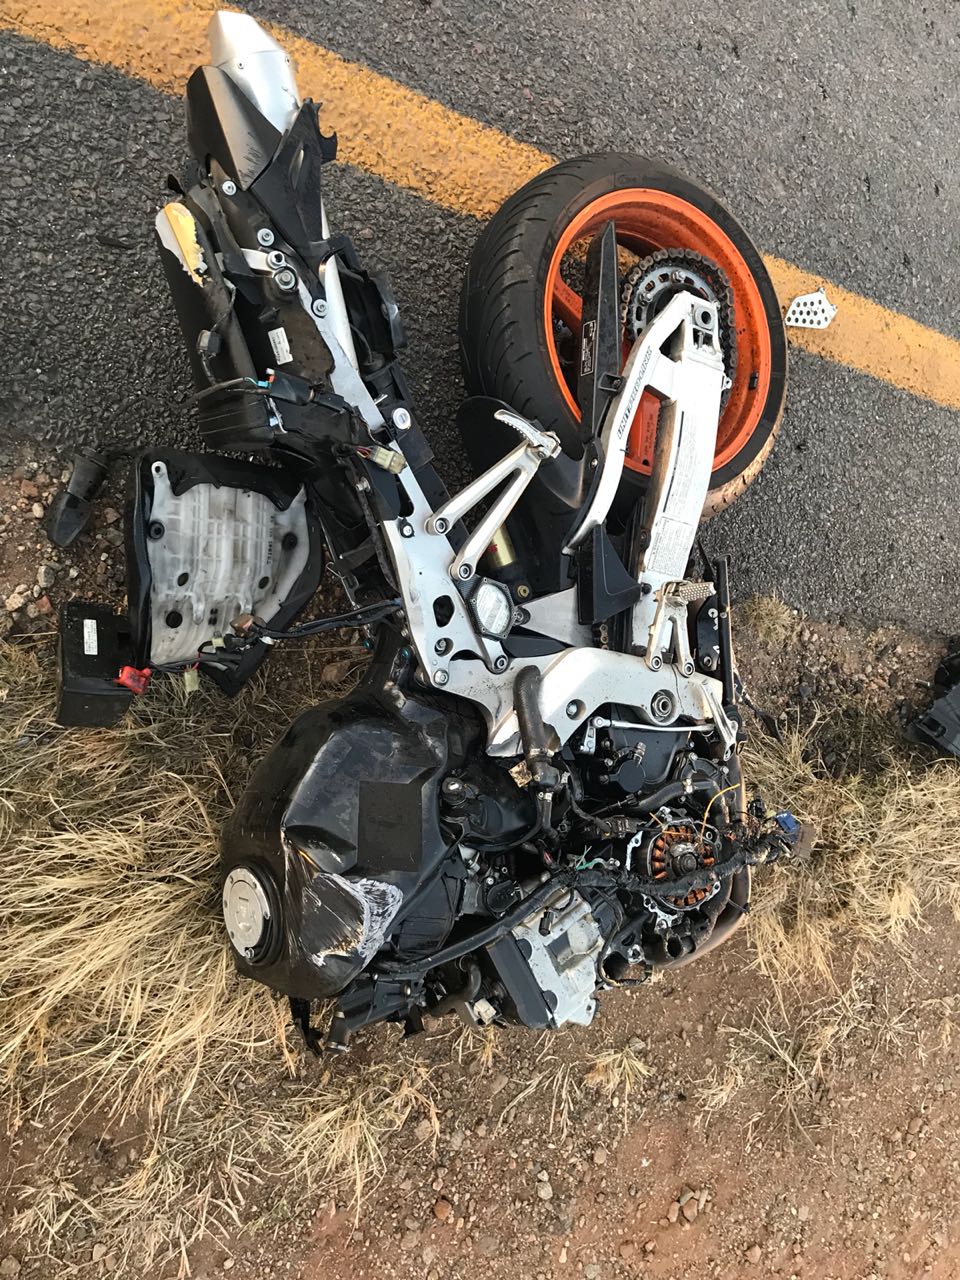 Major crash as 4 bikes and car collide on the R24 near Rustenburg